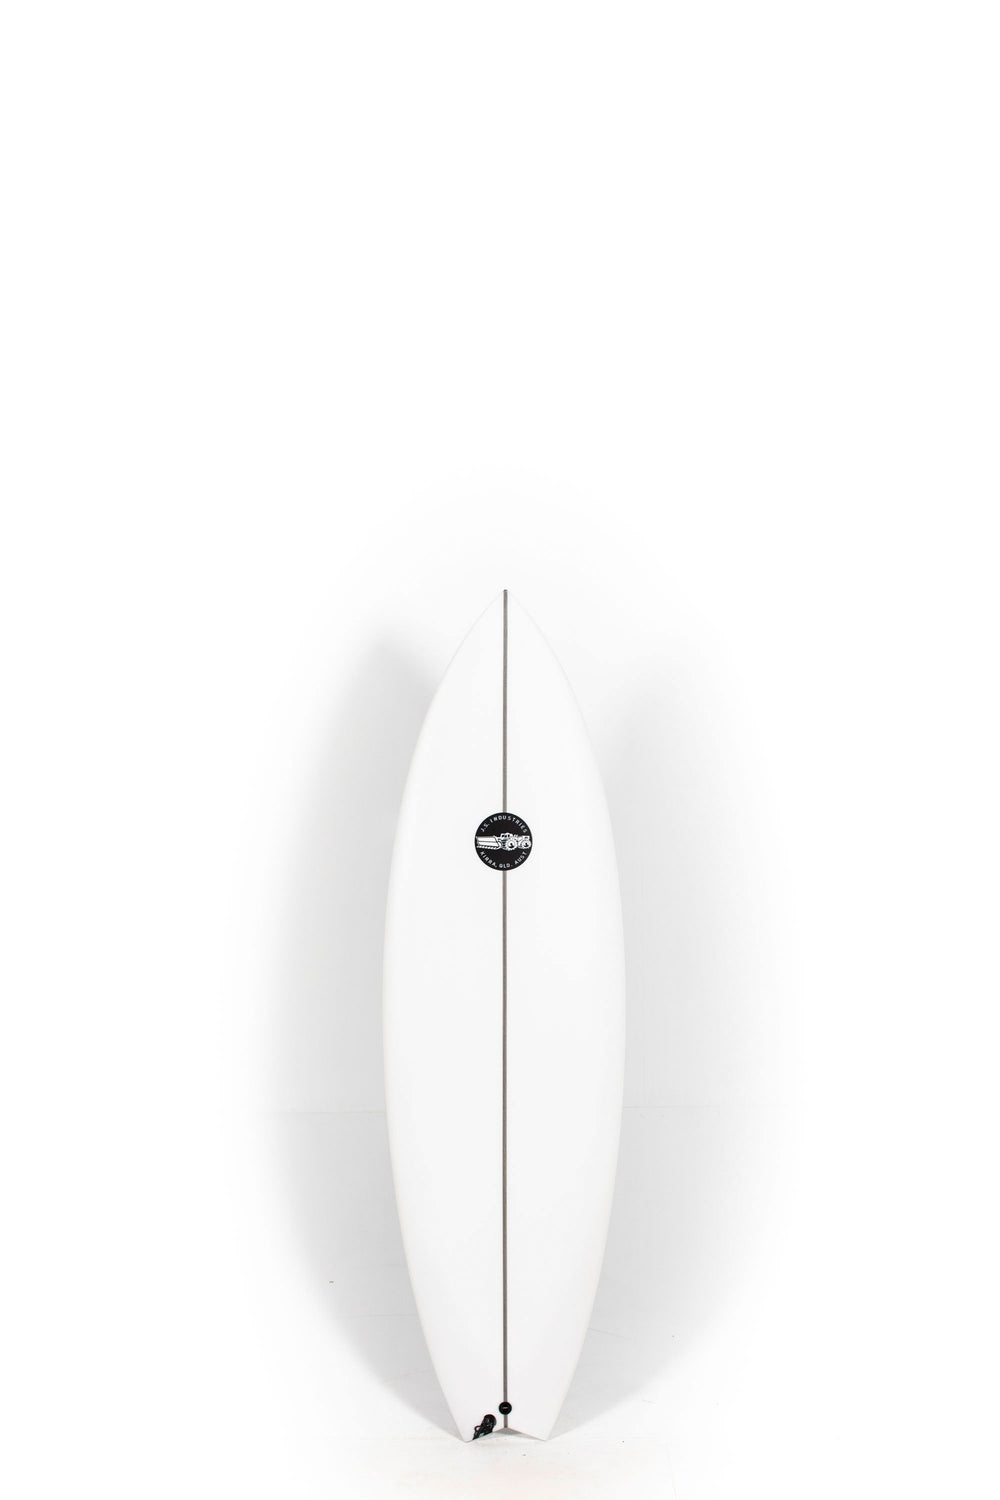 Pukas Surf Shop - JS Surfboards - BLACK BARON 2.1 - 5'7